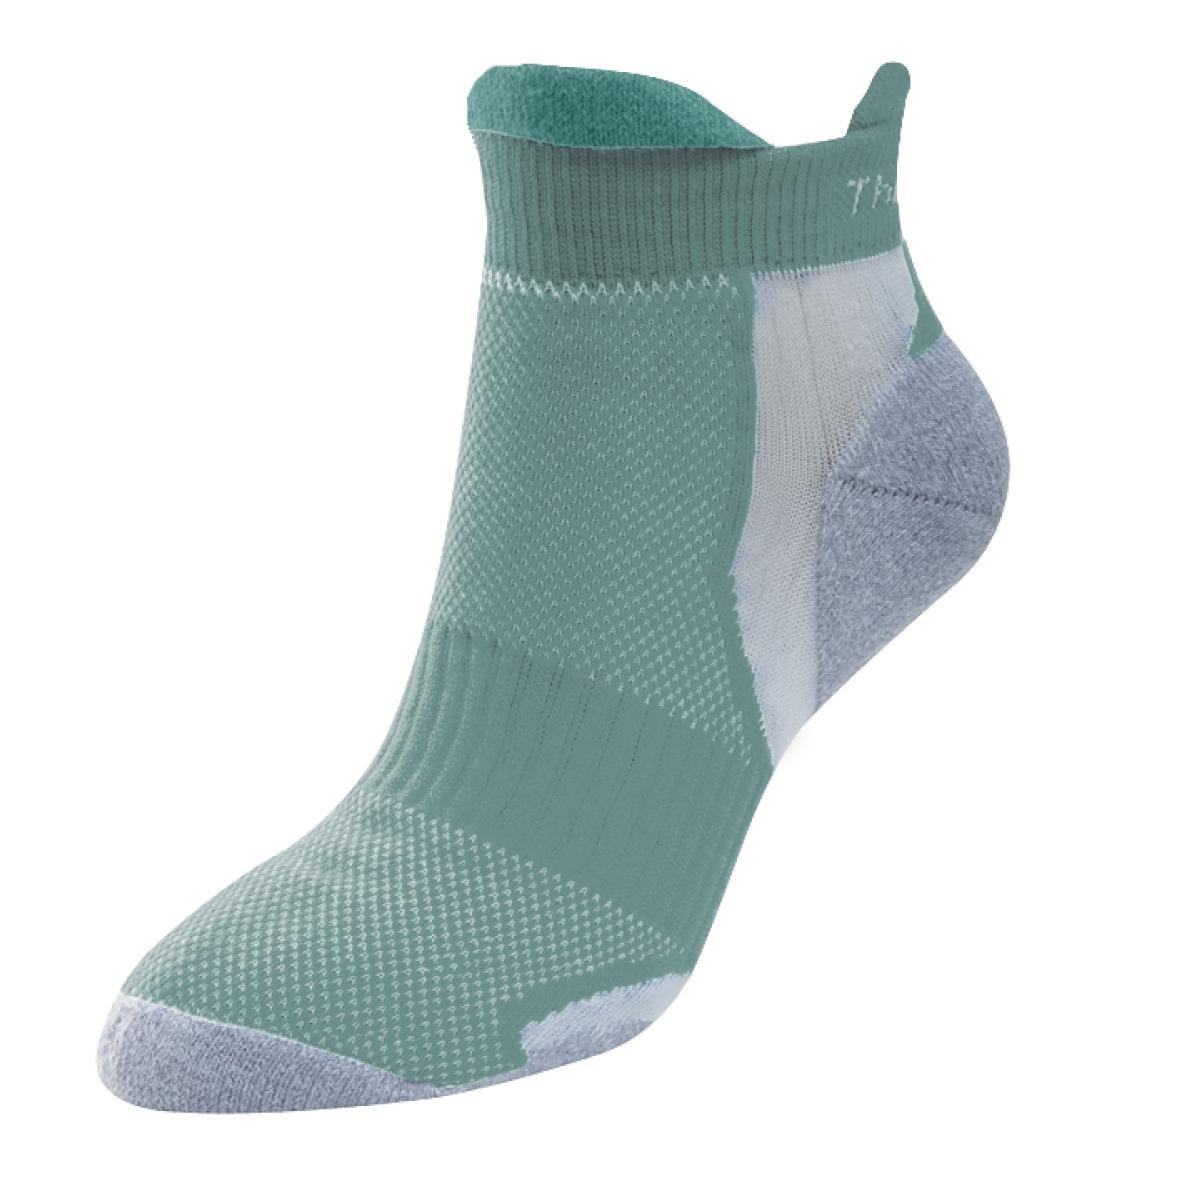 Socks with Tee or Singlet Bundle - Aqua Motion